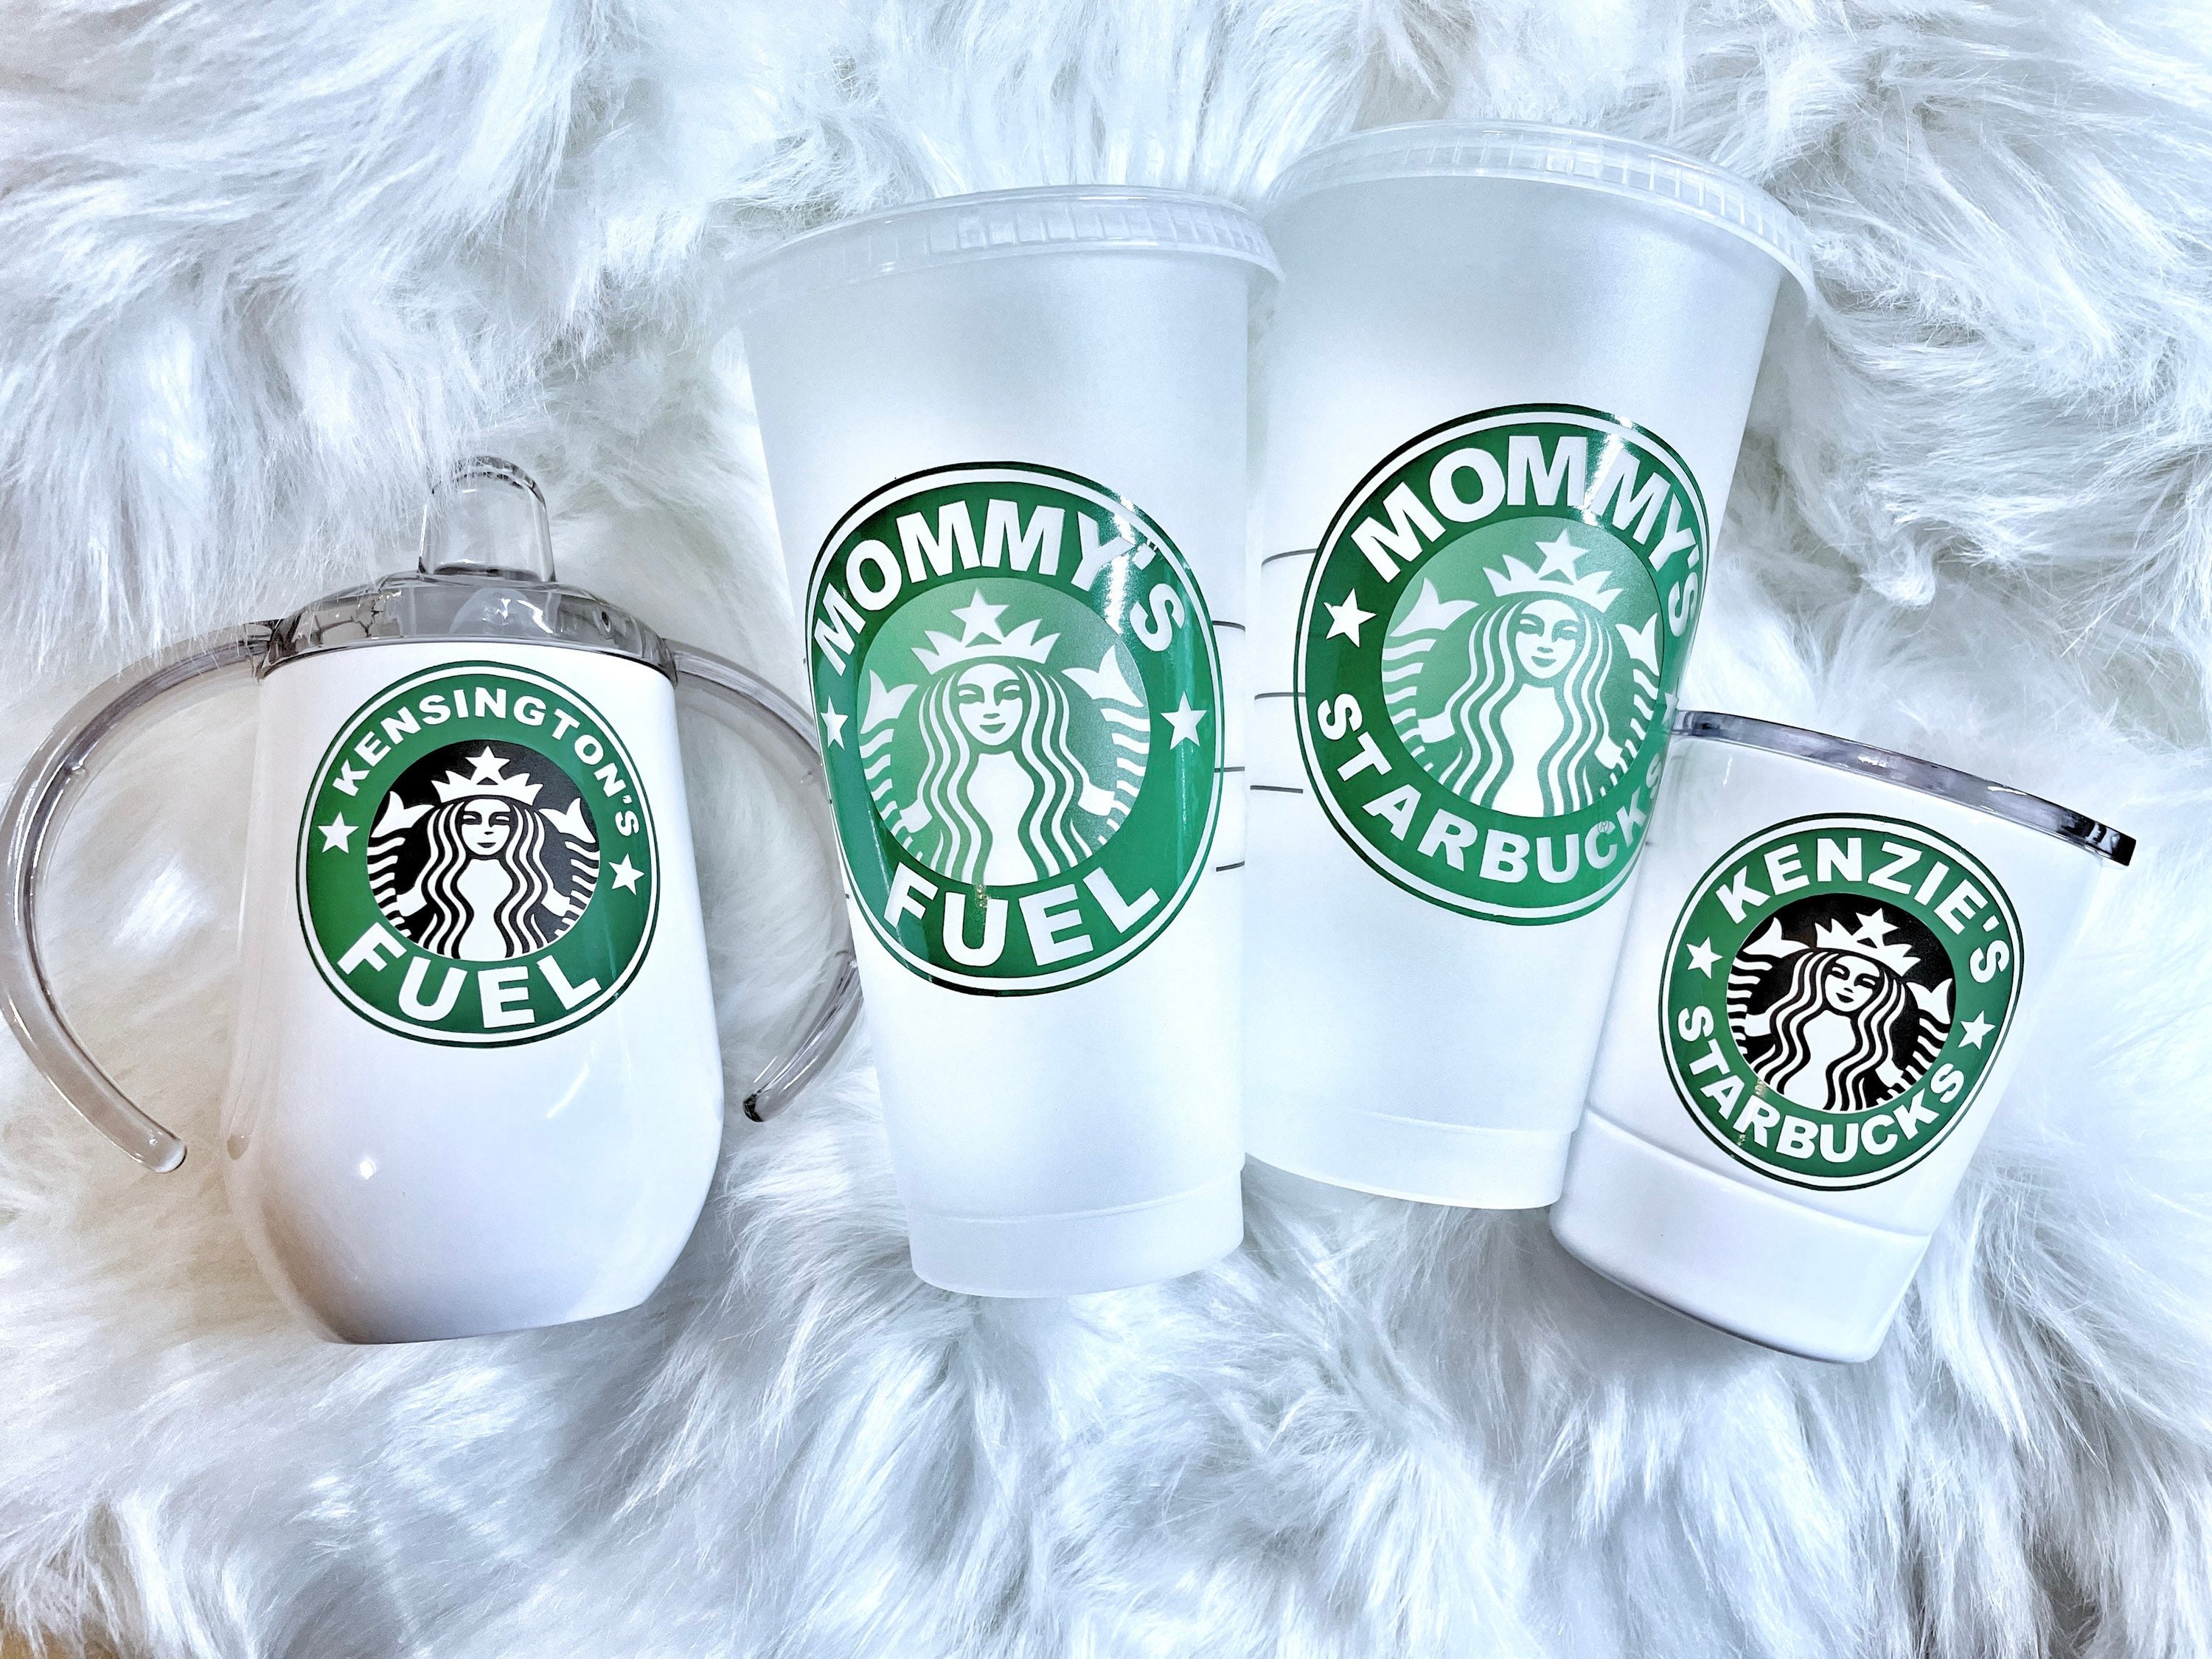 Mama & Mini Starbucks INSPIRED Set of 2 Matching Cold Cups Venti